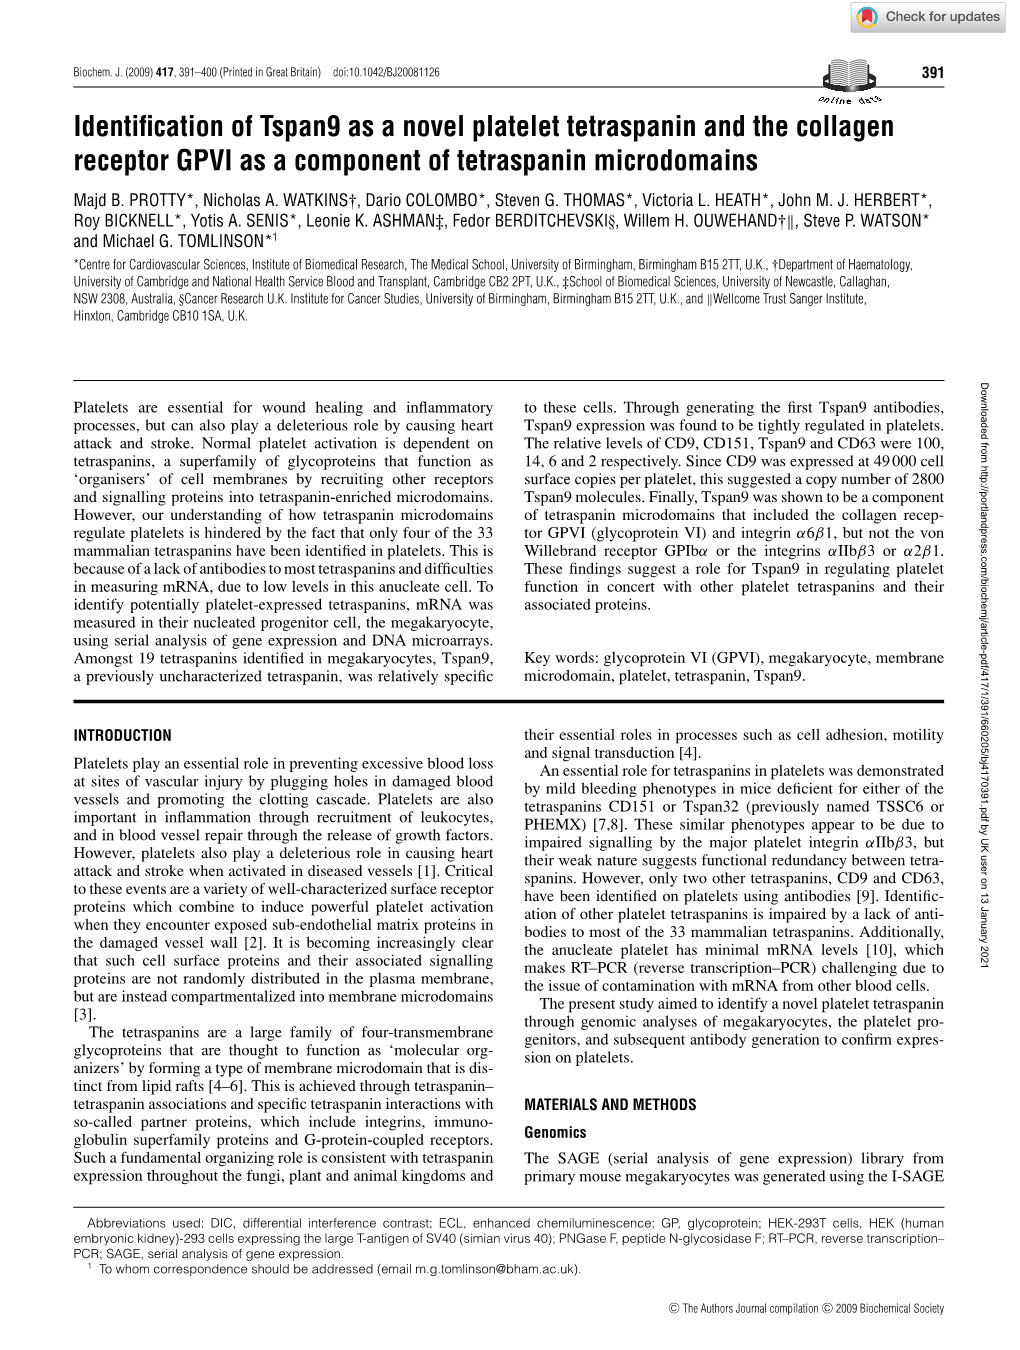 Identification of Tspan9 As a Novel Platelet Tetraspanin and The